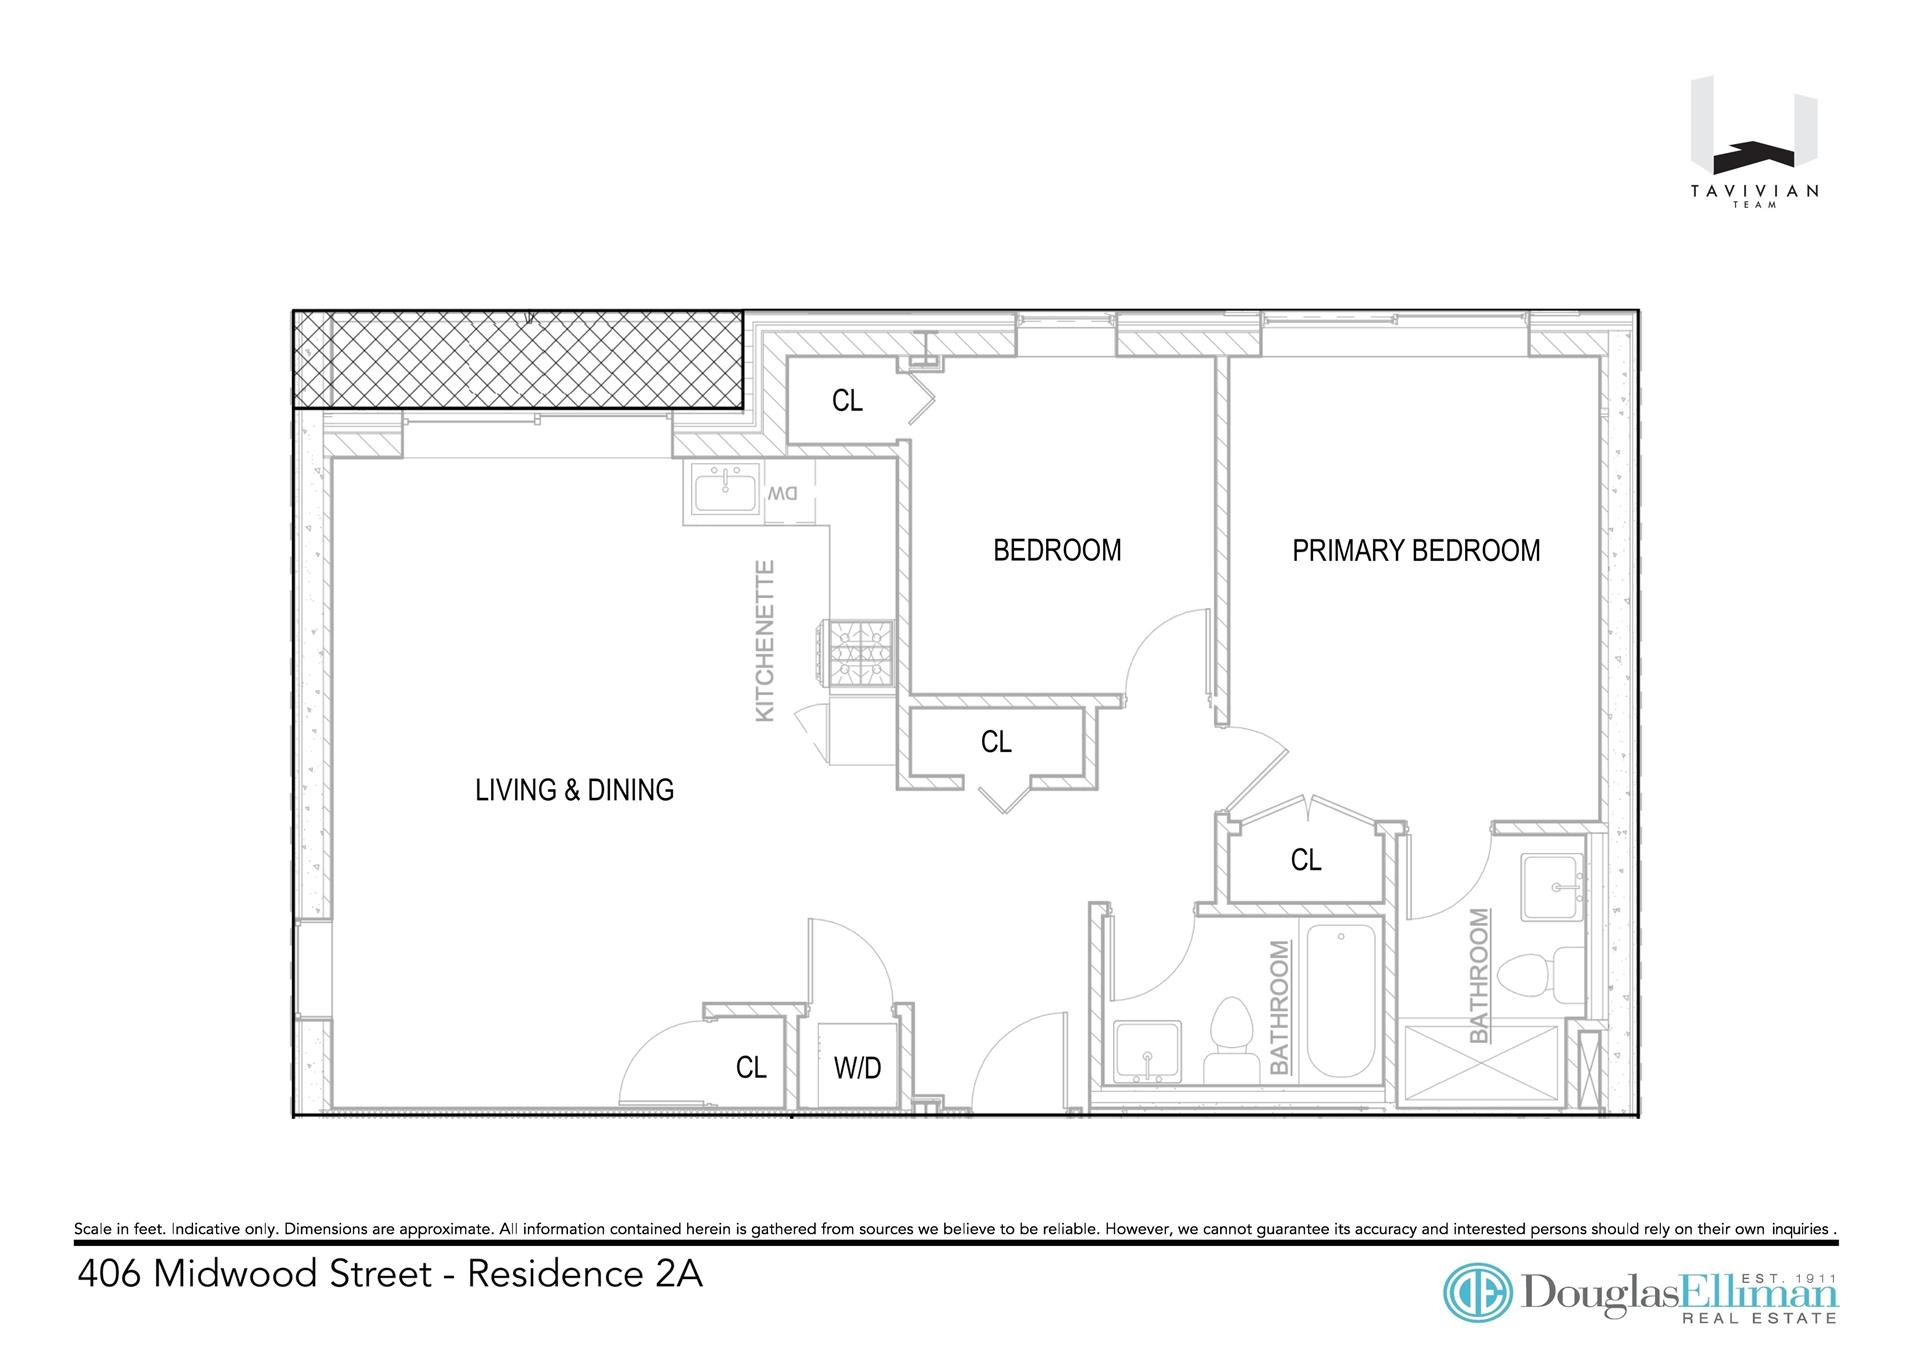 Floorplan for 406 Midwood Street, 2A